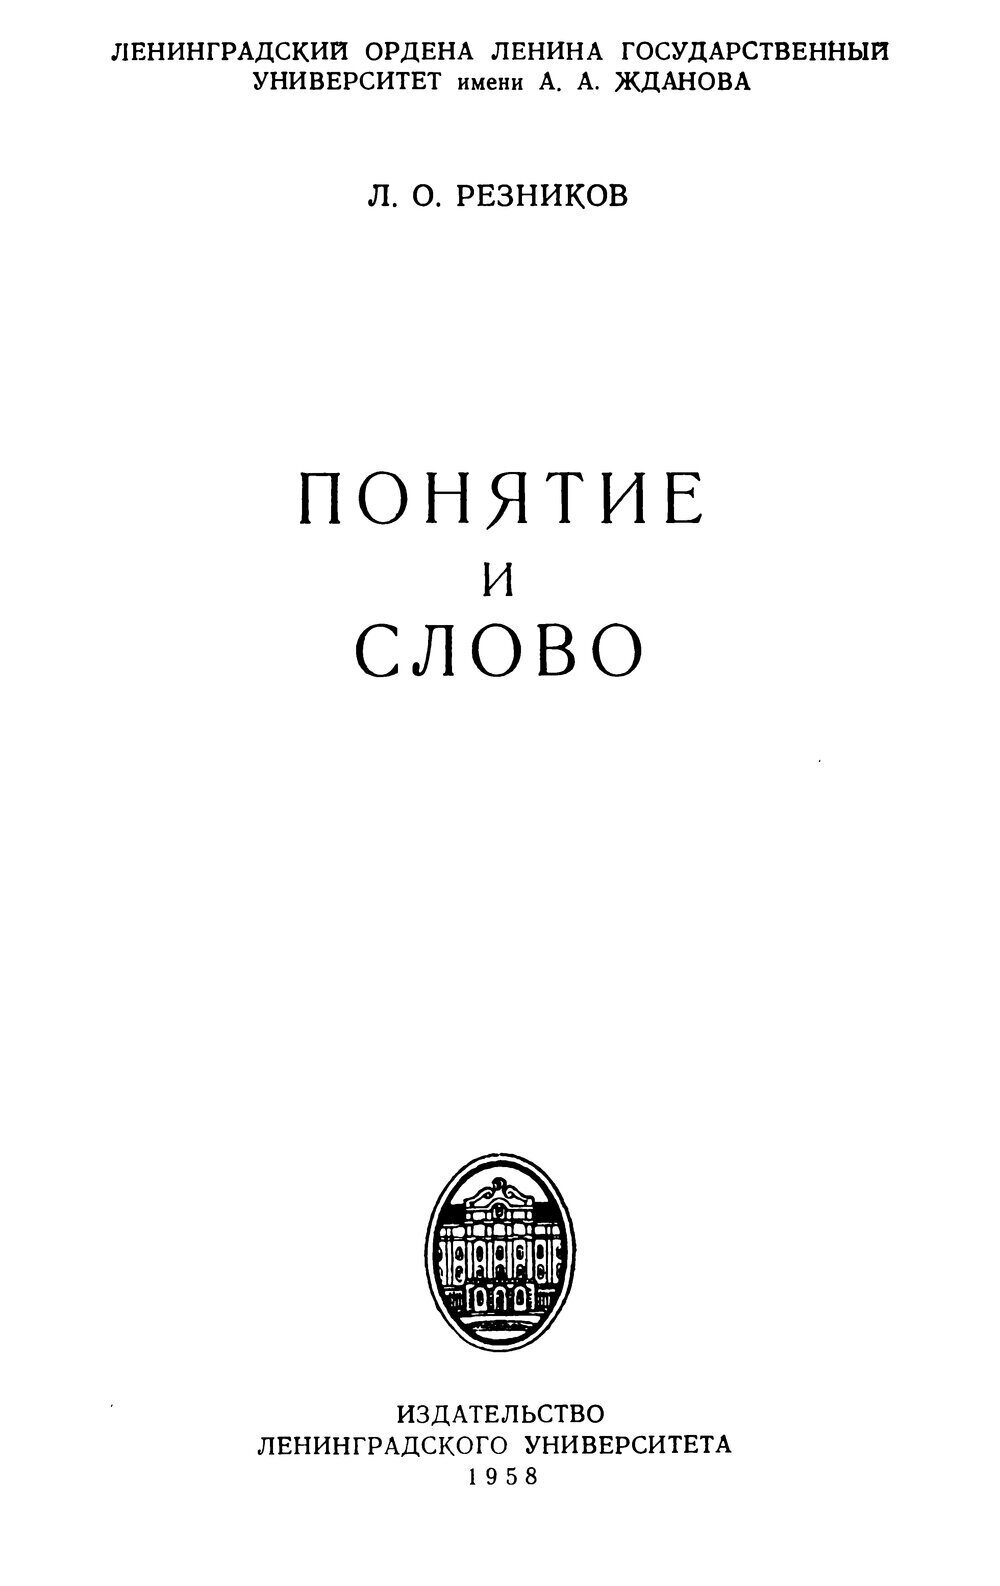 Обложка книги "Понятие и слово"